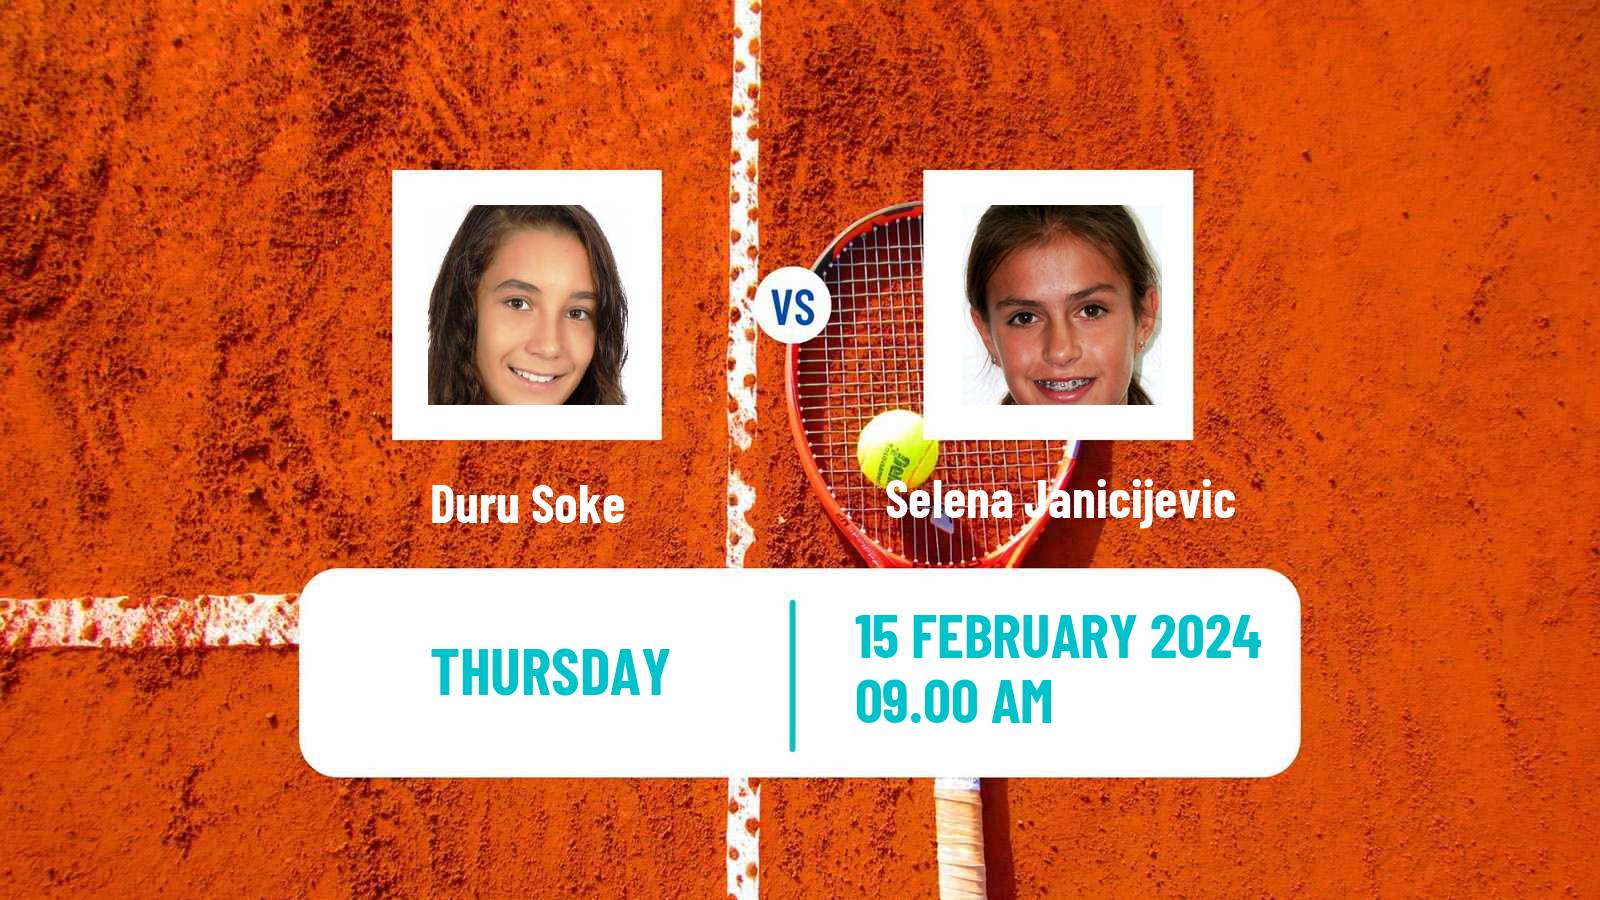 Tennis ITF W35 Antalya 3 Women Duru Soke - Selena Janicijevic